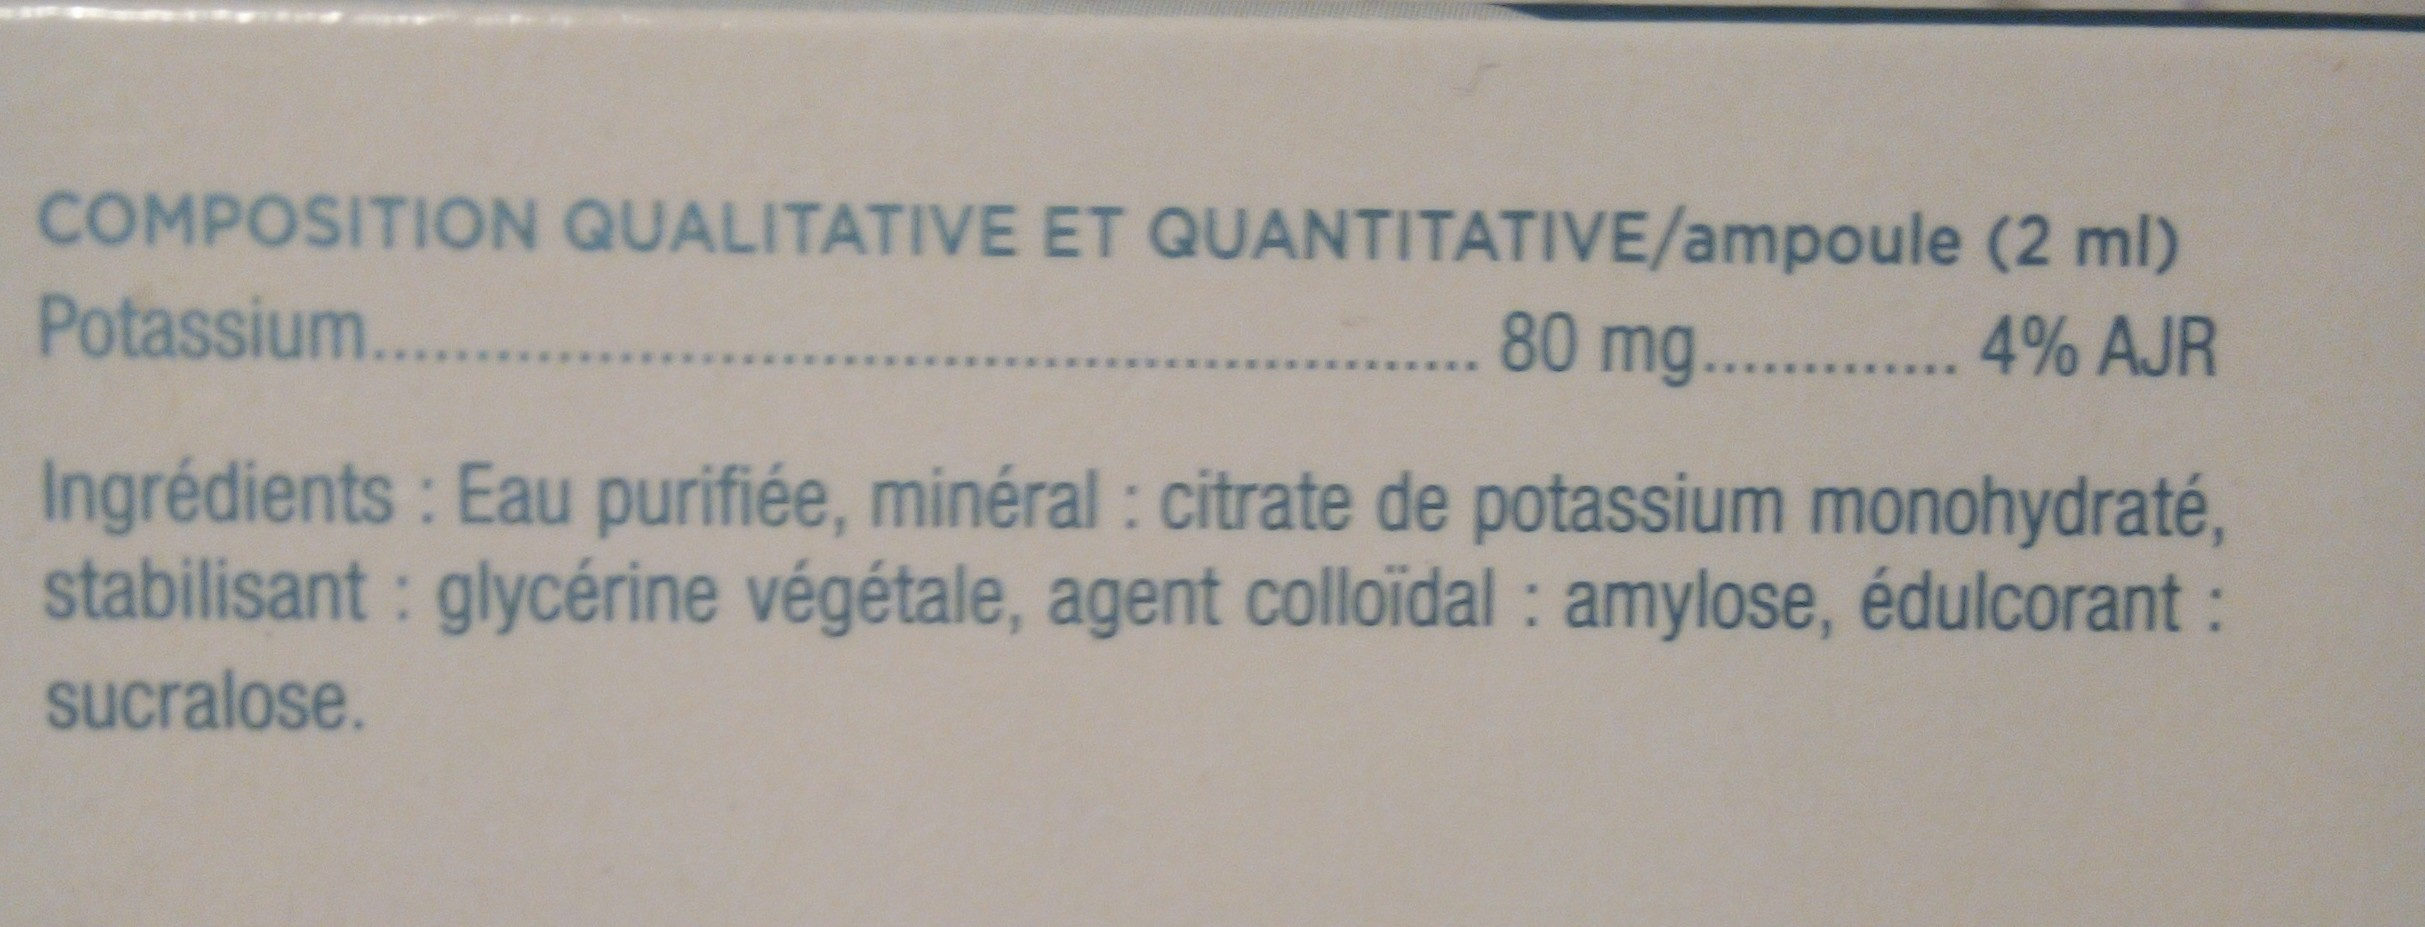 granions de potassium - Ingredientes - fr